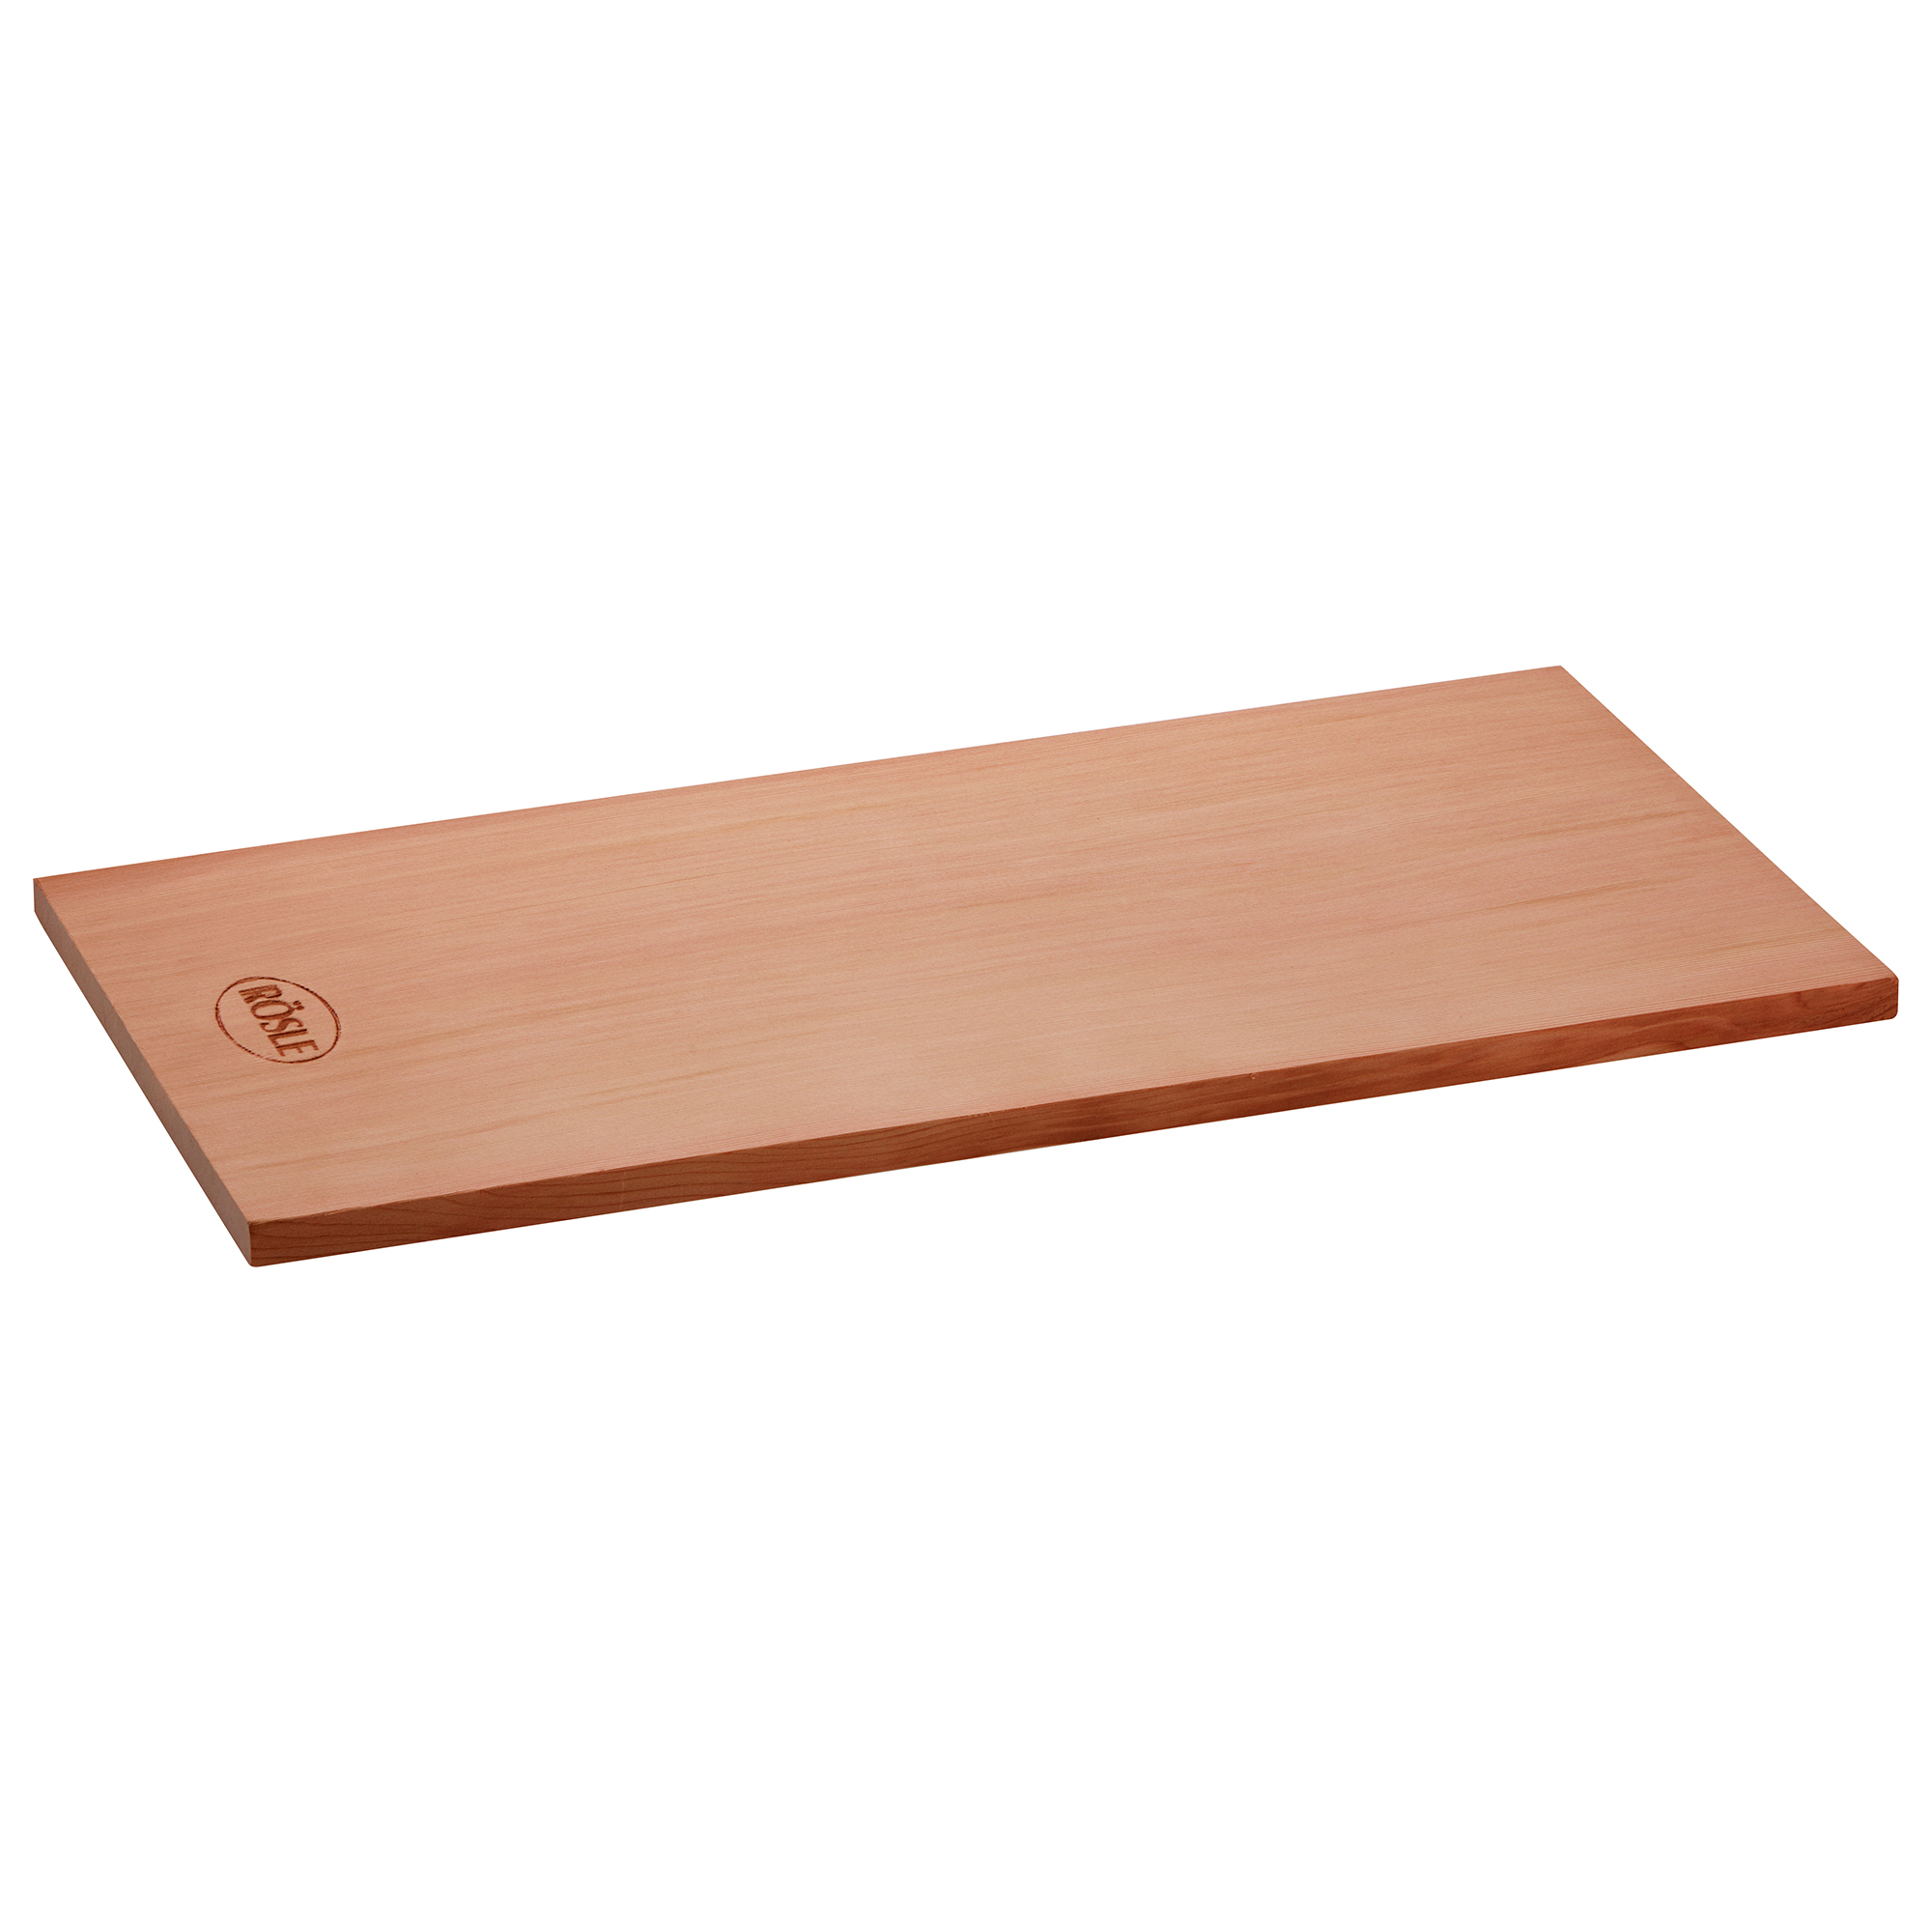 Aroma Boards Cedar Wood 40 x 19.5 cm|15.7 x 7.7 in. 2 pcs